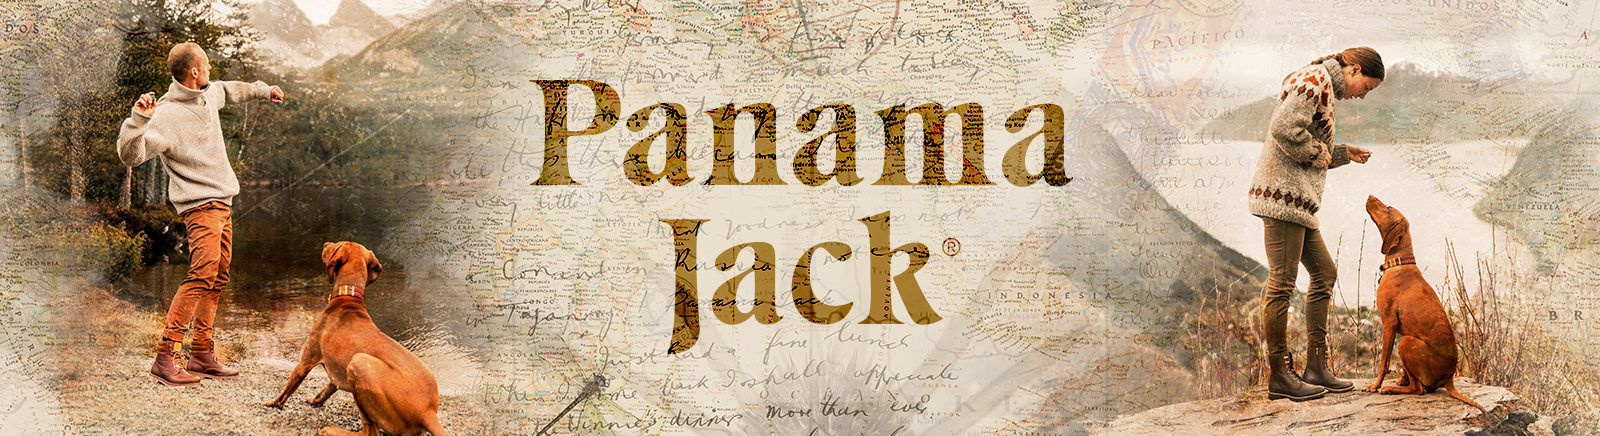 Juppen: Panama Jack Combat Boots für Damen online shoppen